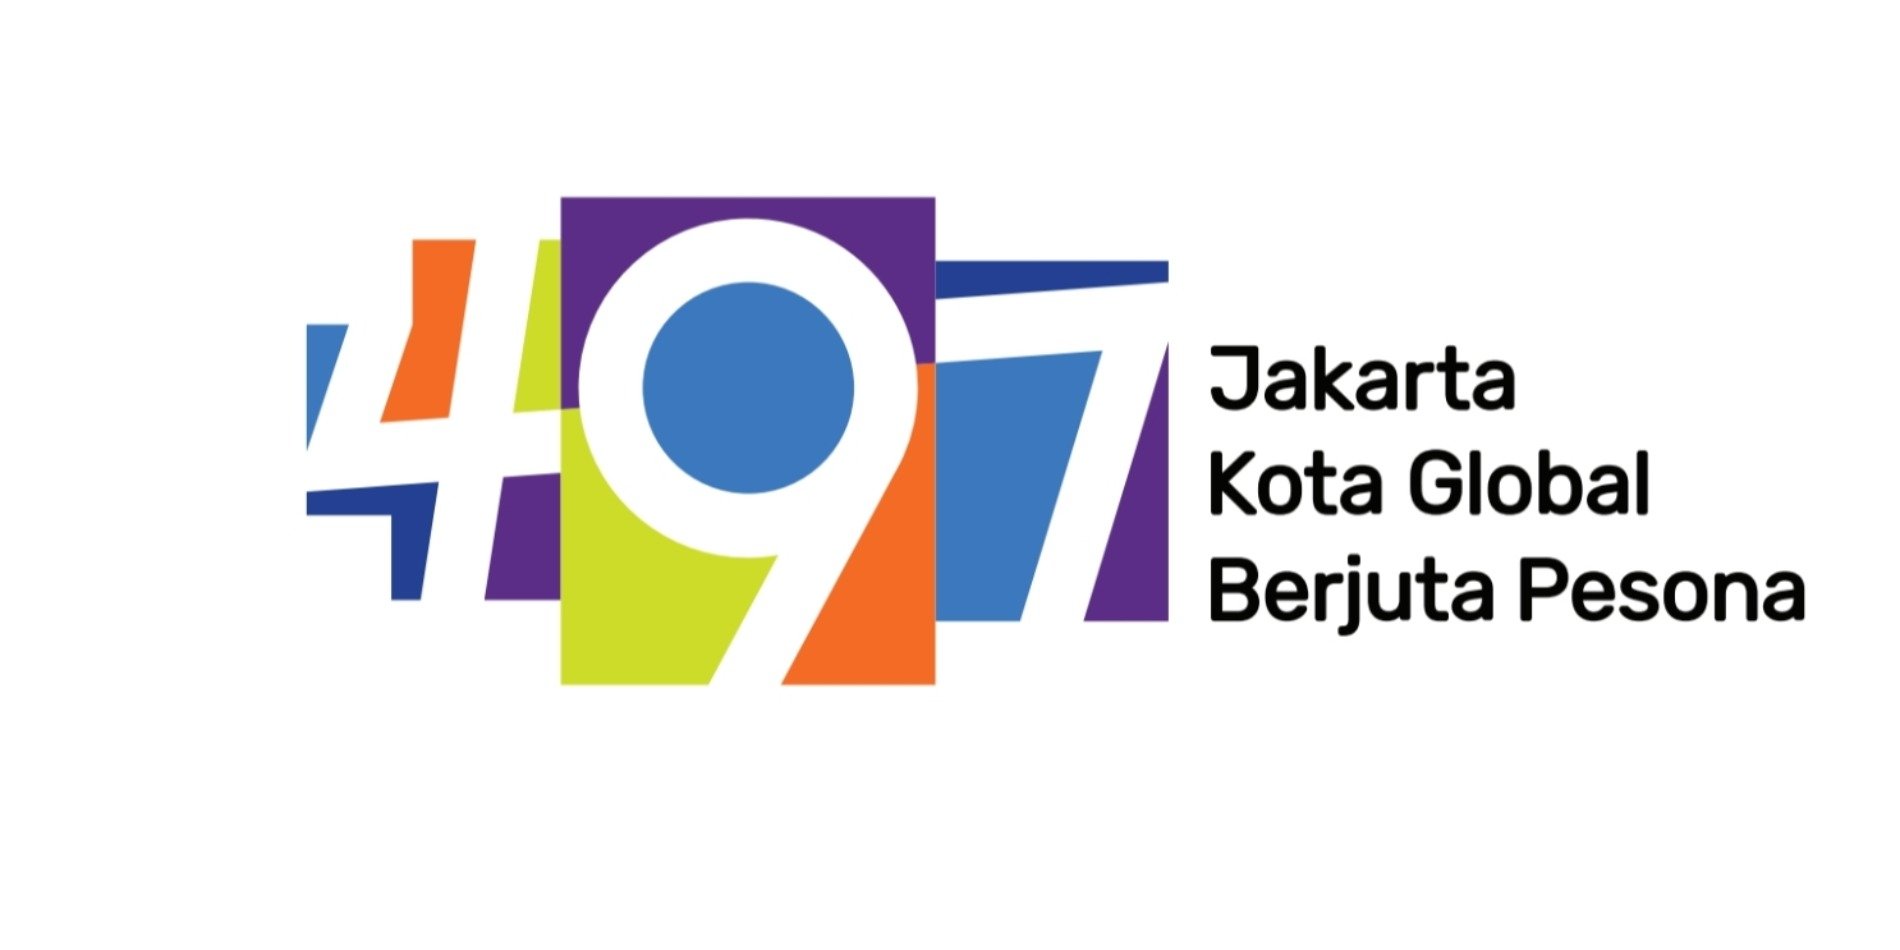 Logo HUT ke-497 Kota Jakarta. (Sumber gambar: Pemprov DKI Jakarta)